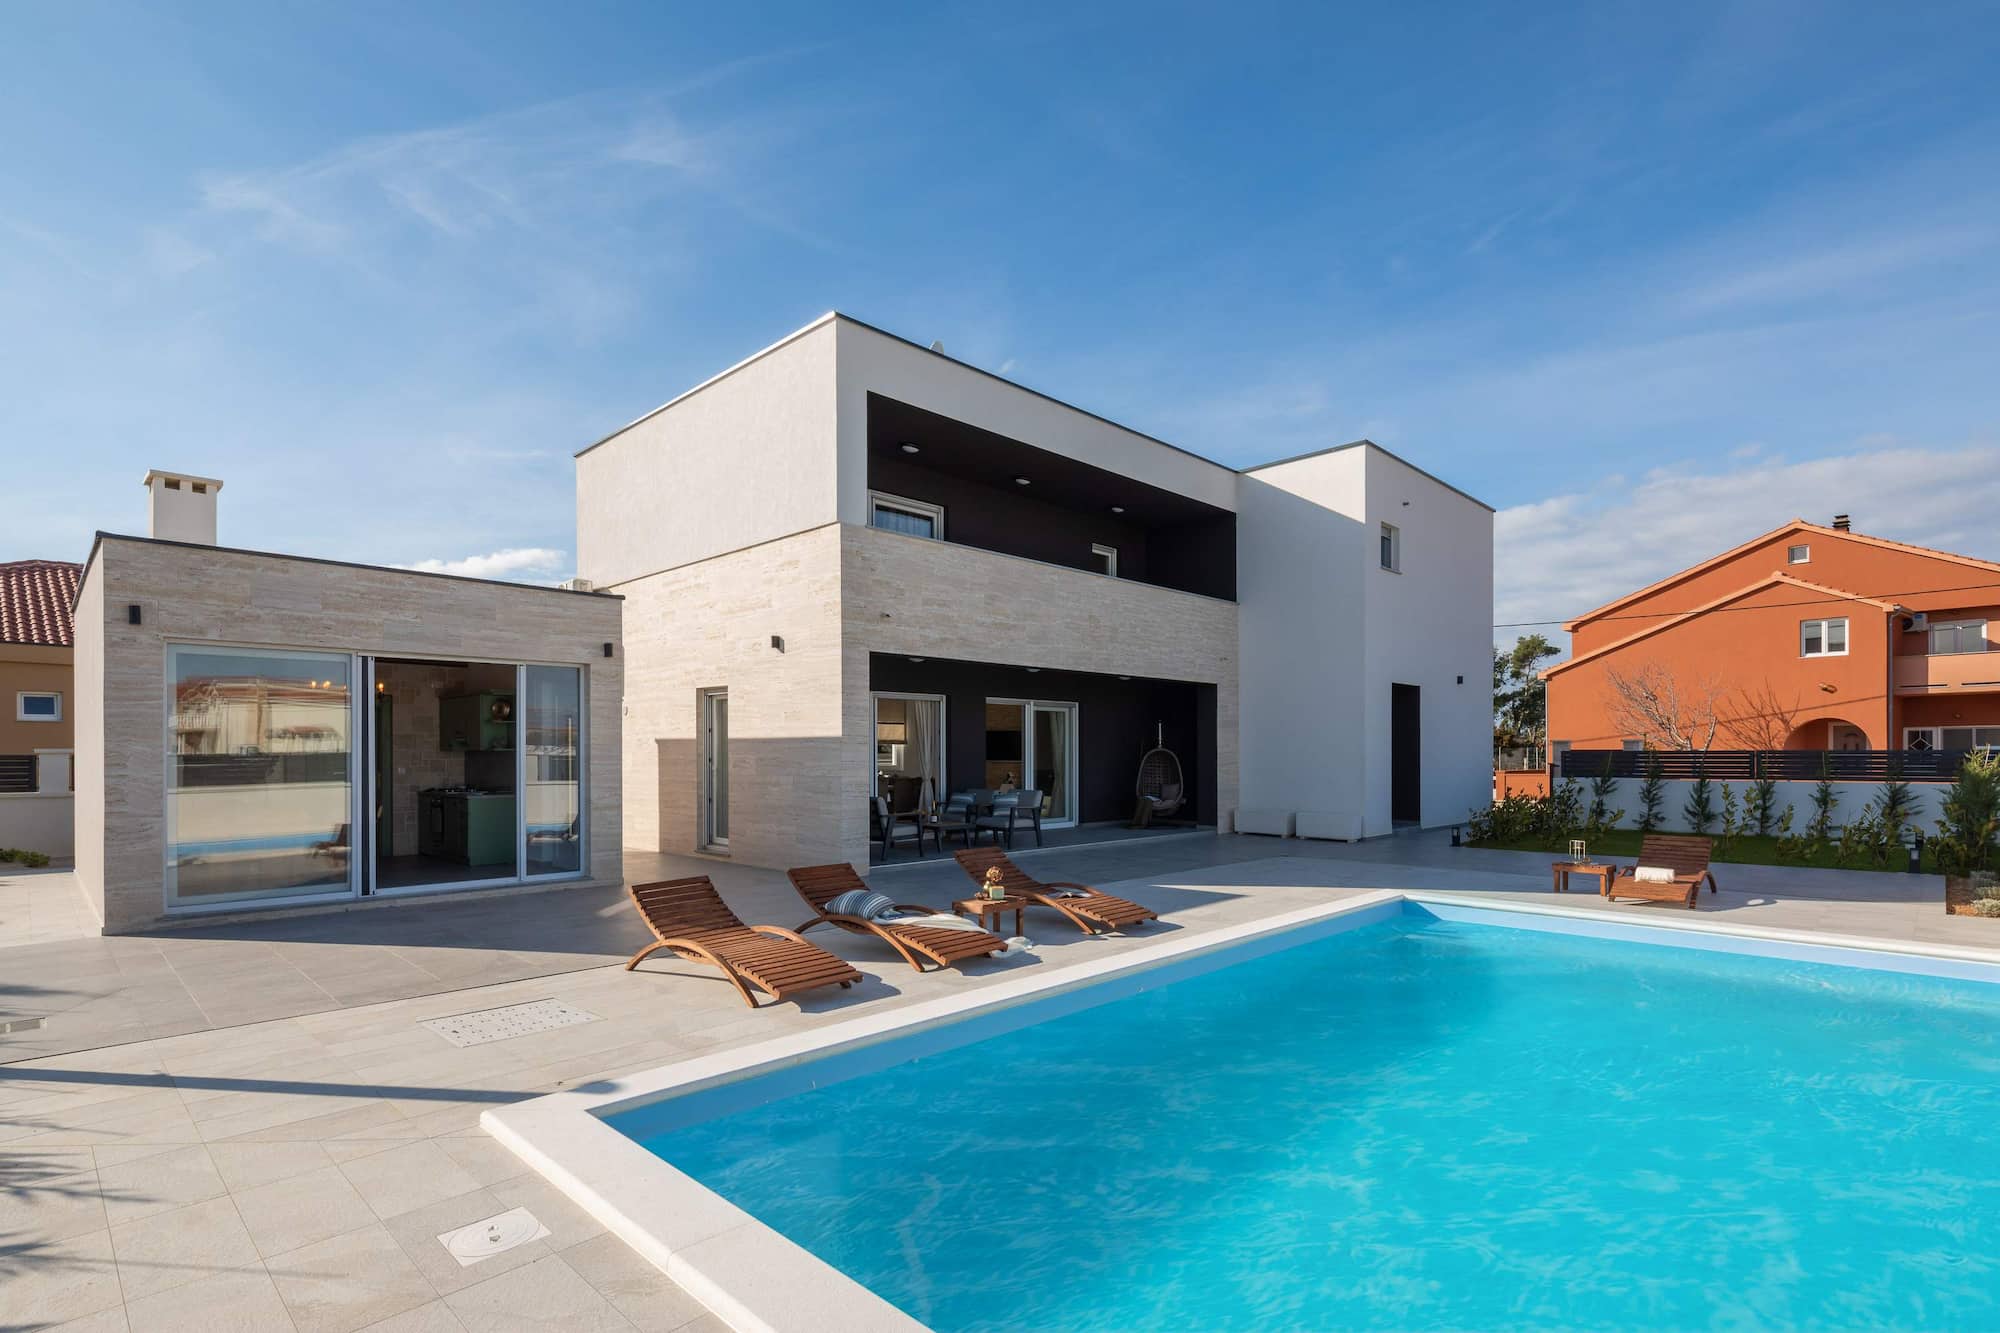 Ferienvilla mit Pool in Kroatien, Pool mit Liegestühlen